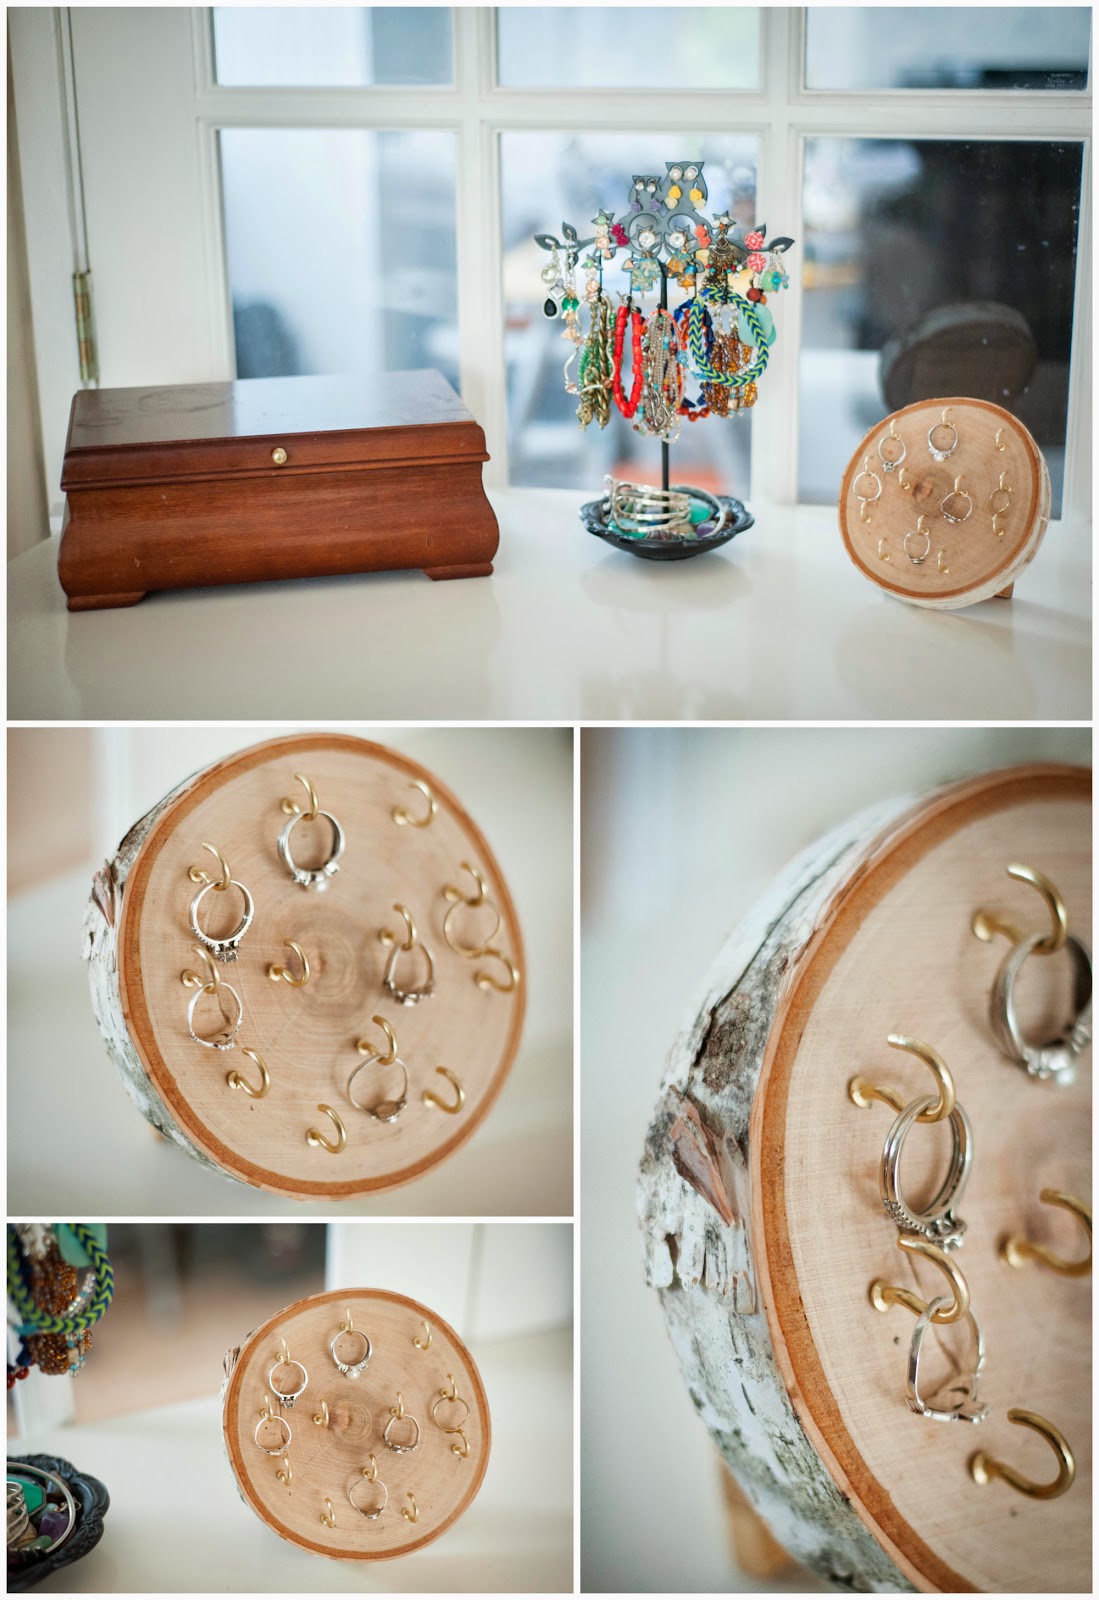 DIY Wood Round Ring Holder on Diane's Vintage Zest!